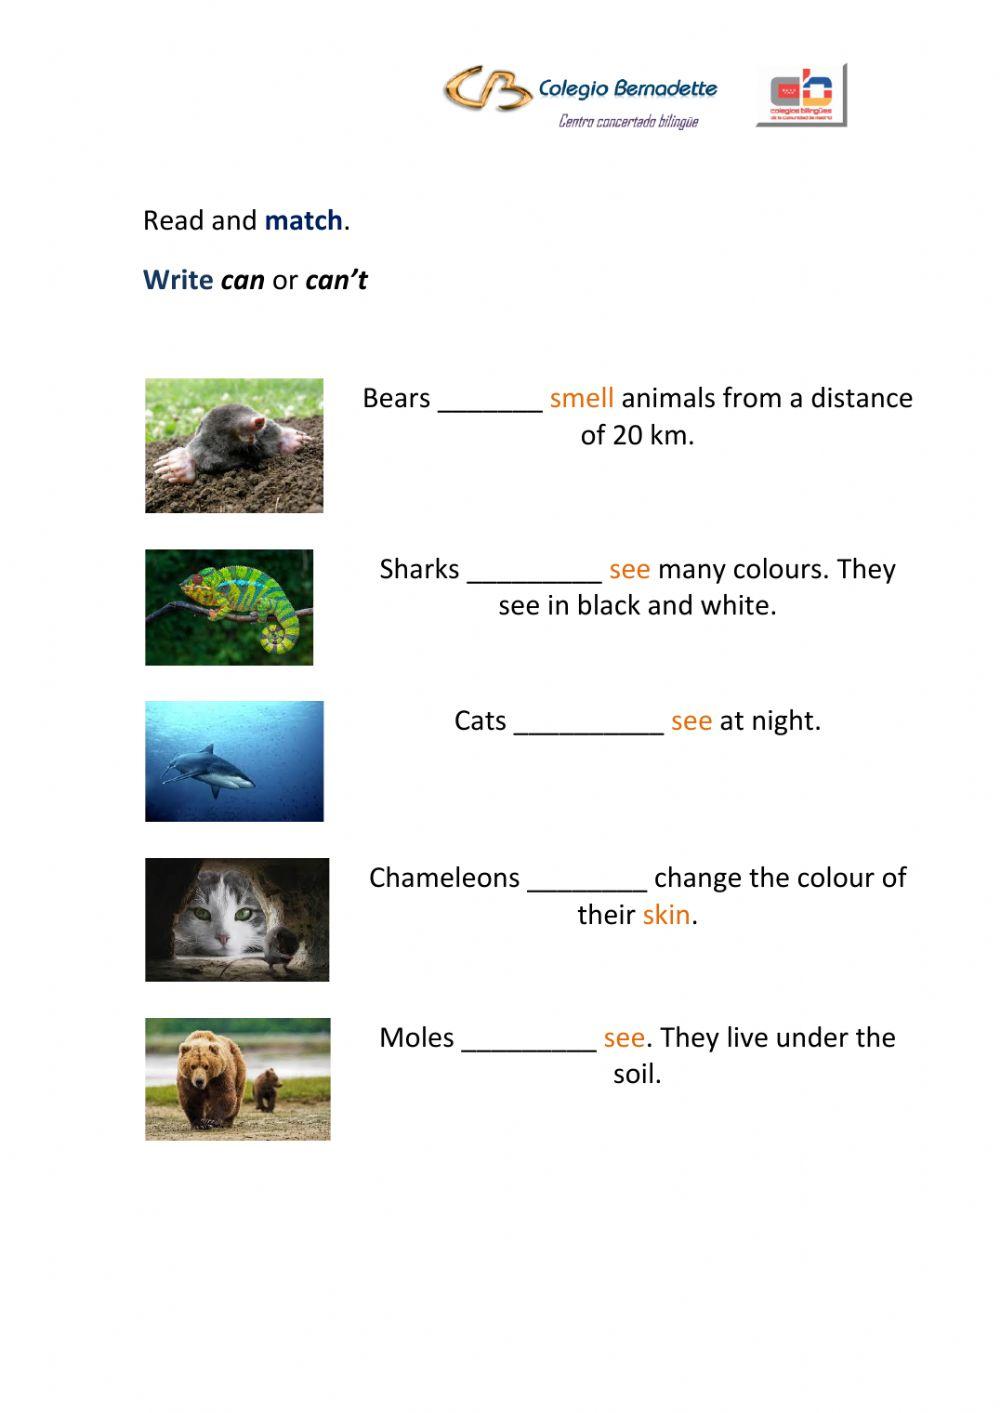 Animal facts